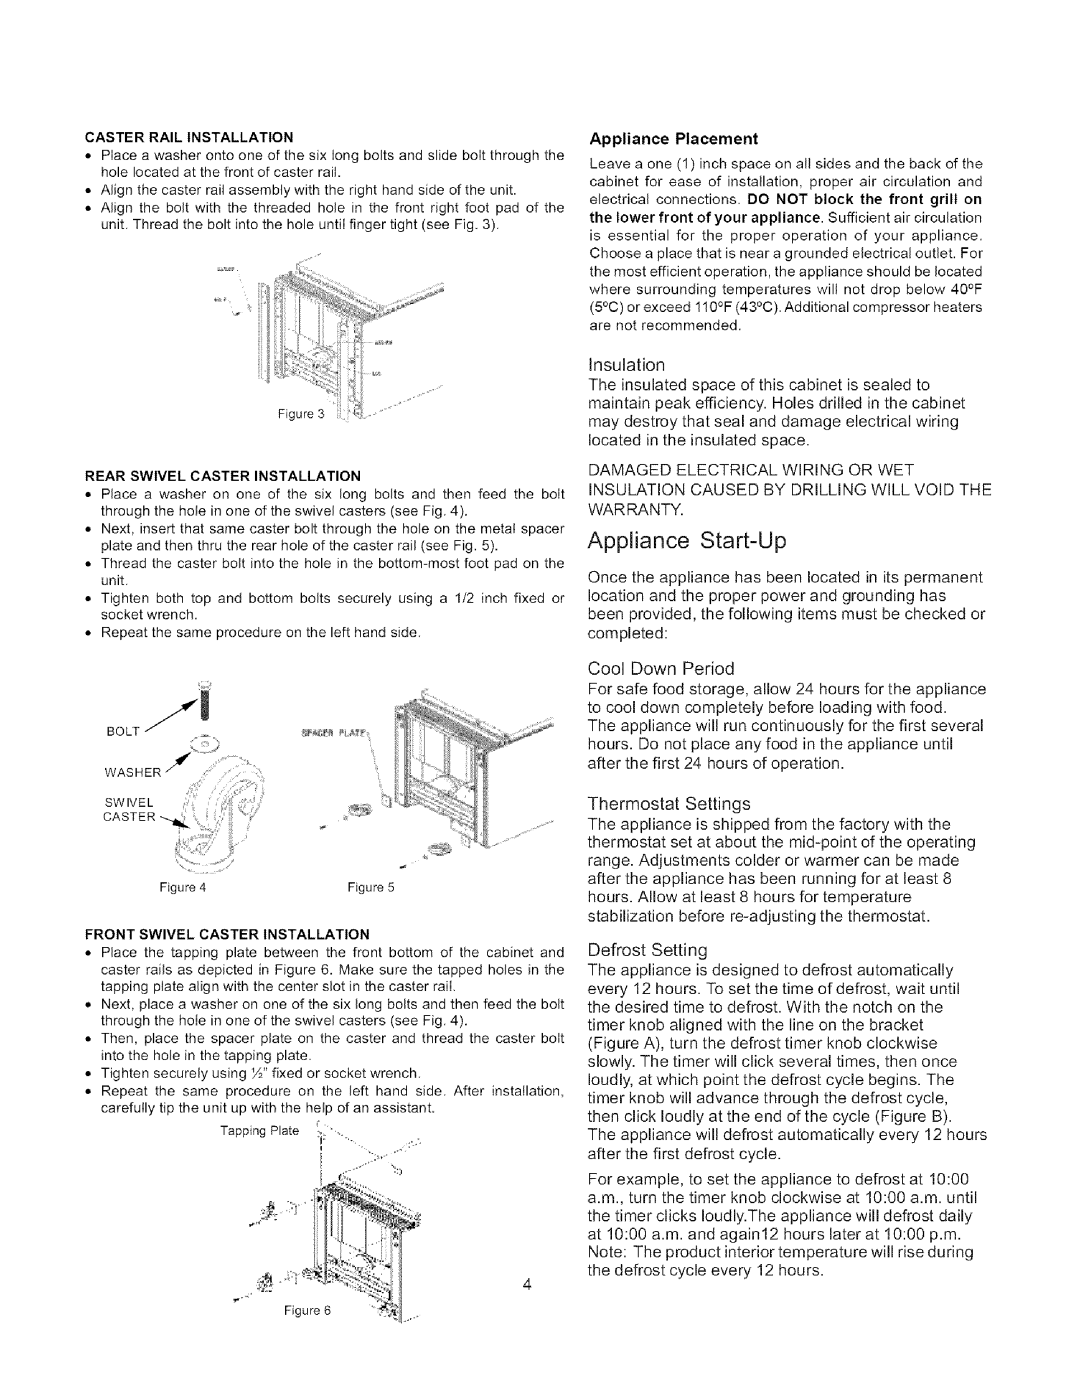 Arctic Air Refrigerator important safety instructions Casterrailinstallation, >, l, o REARSWIVELCASTERINSTALLATION 